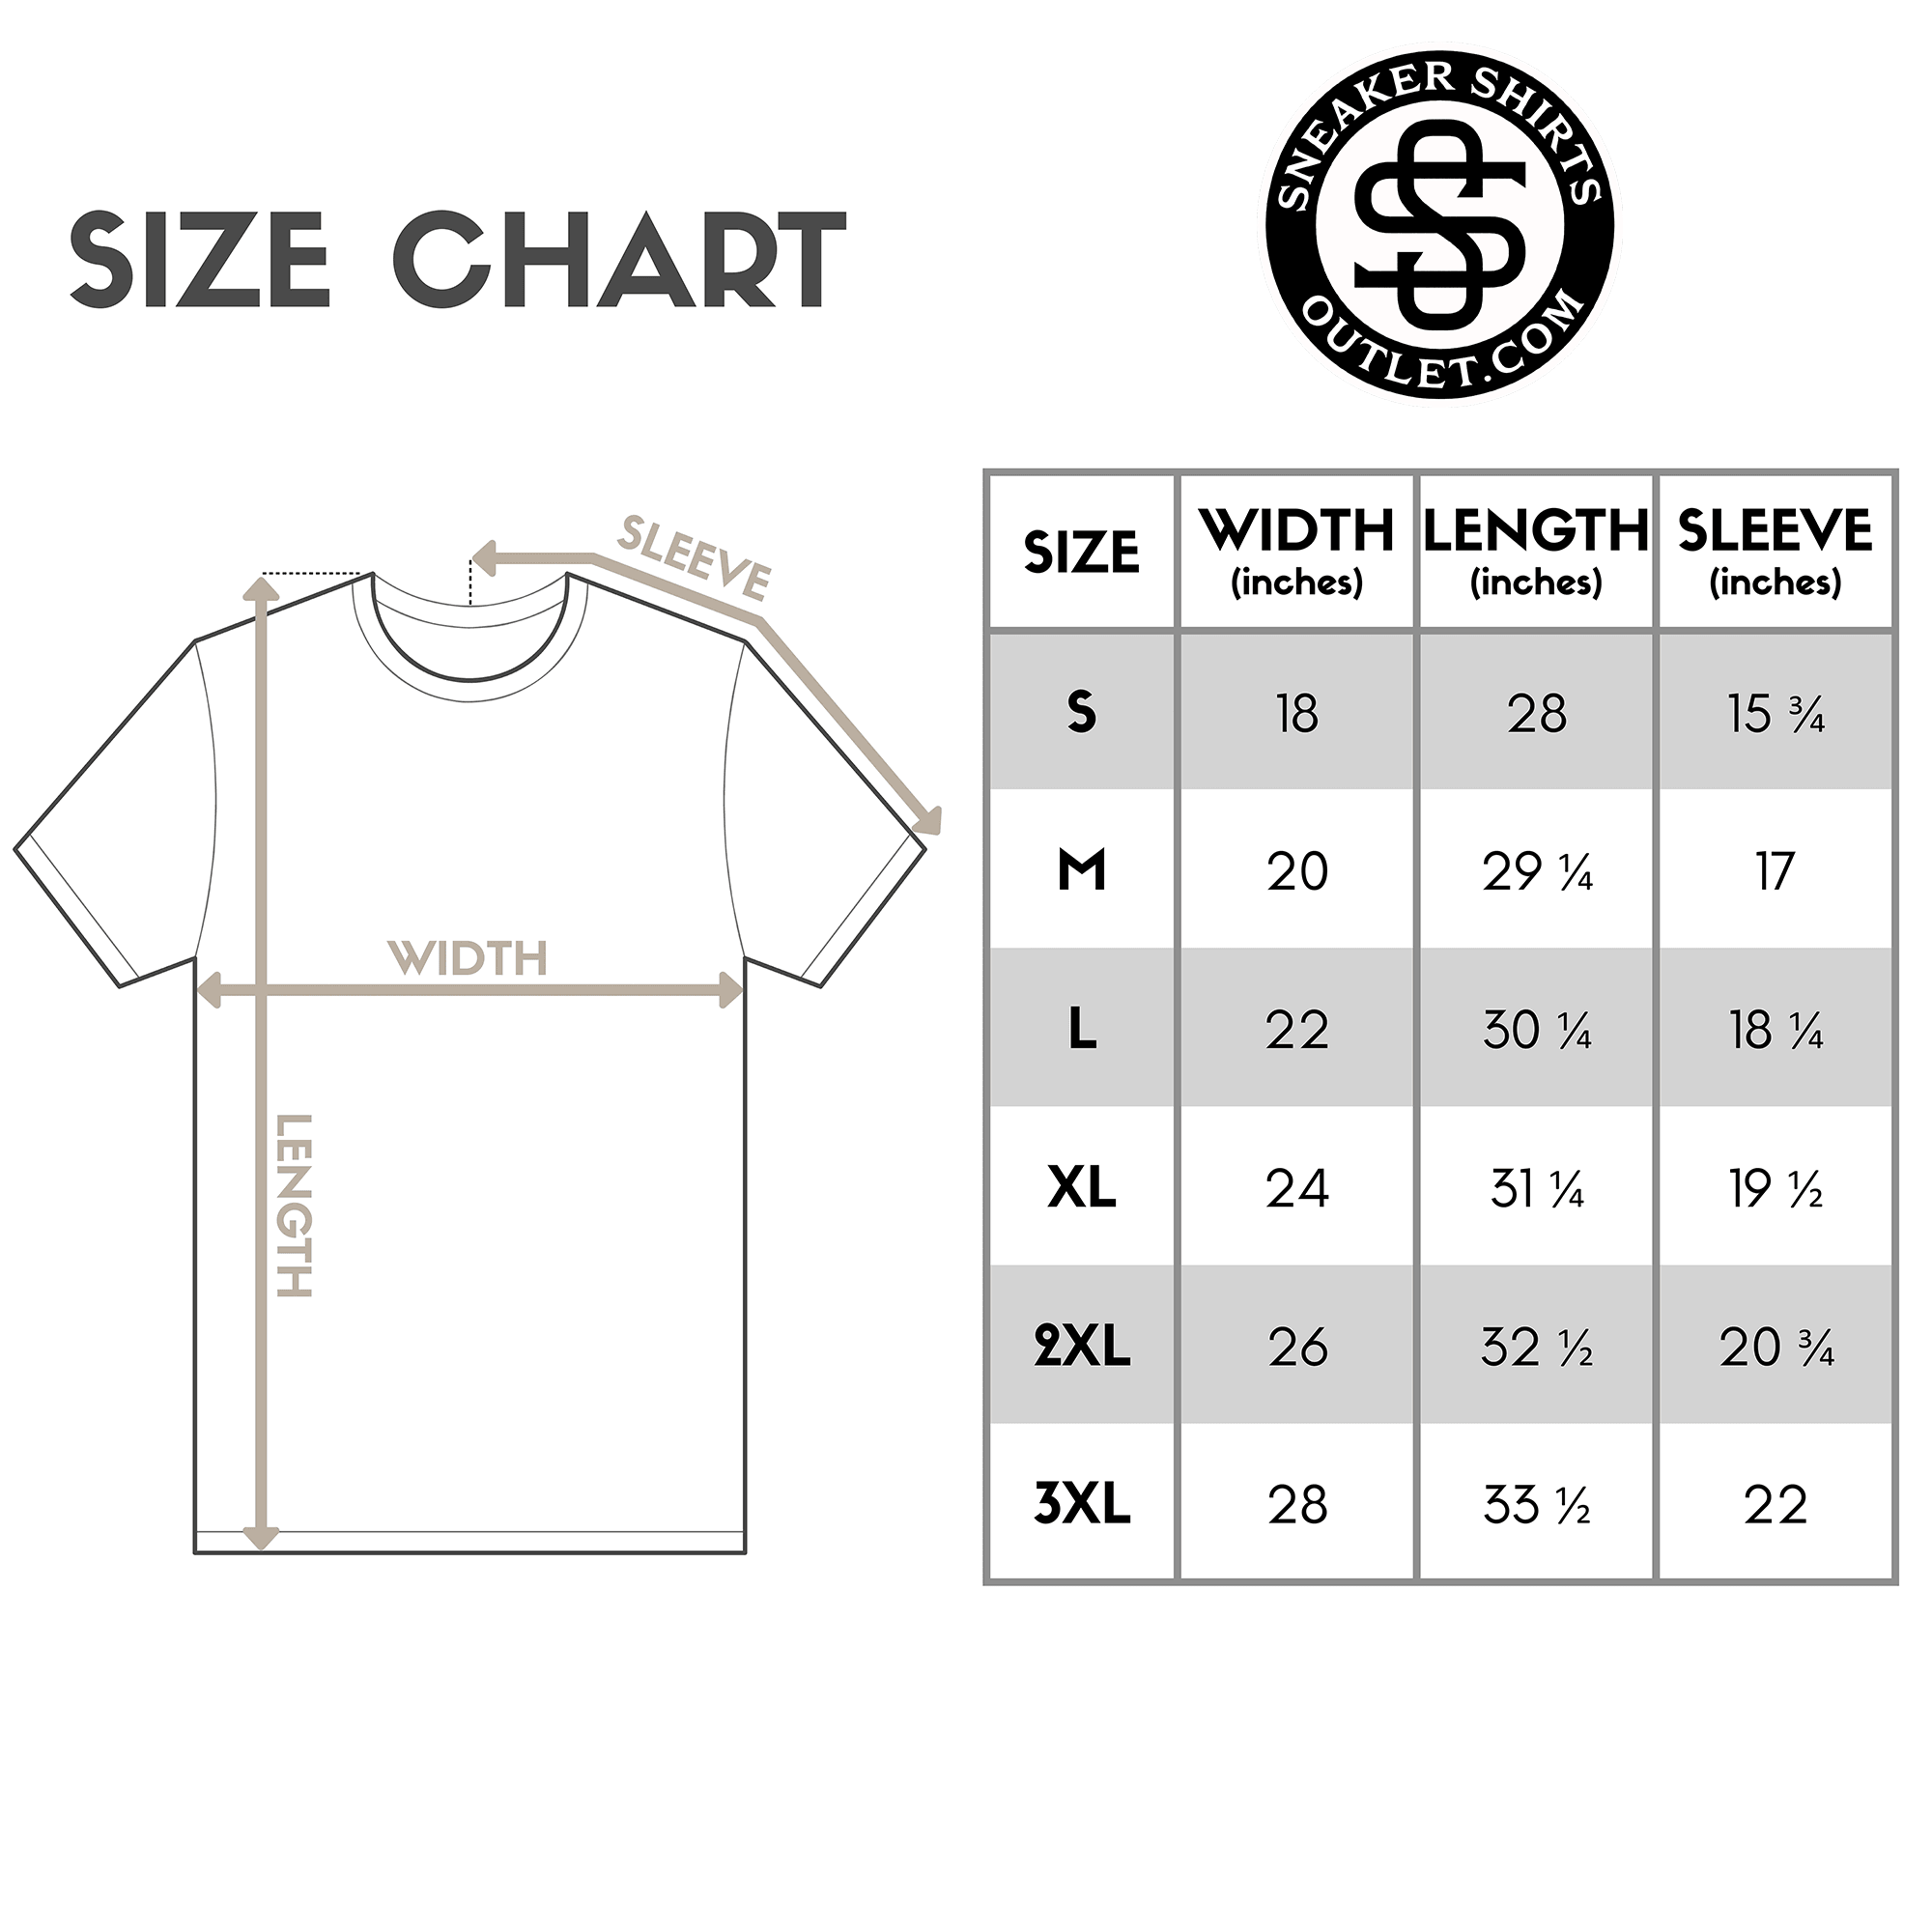 size chart 23 Melting Shirt Air Max 1 x Patta photo